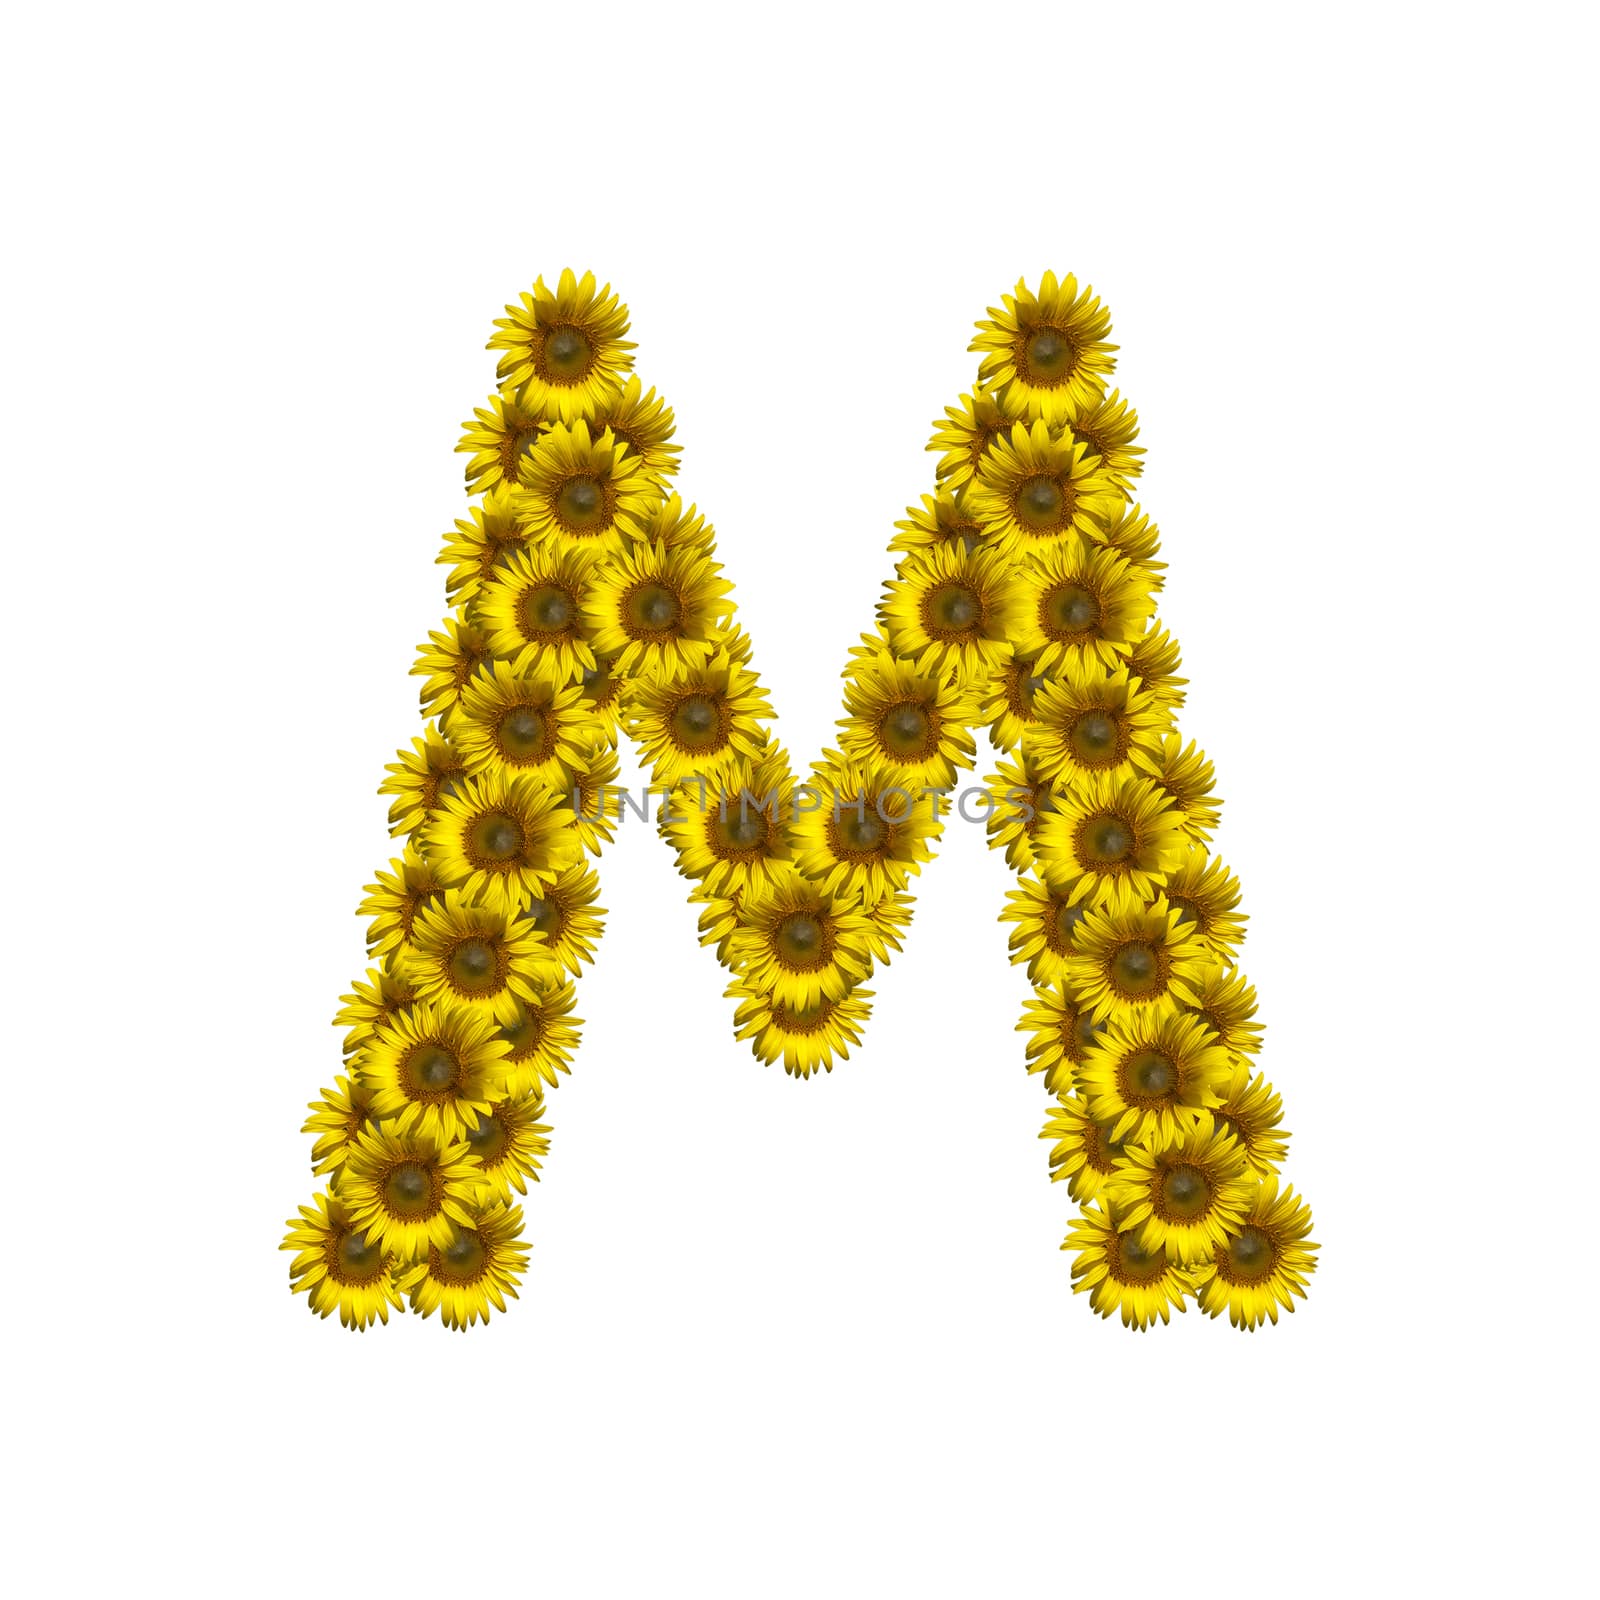 Isolated sunflower alphabet M by Exsodus